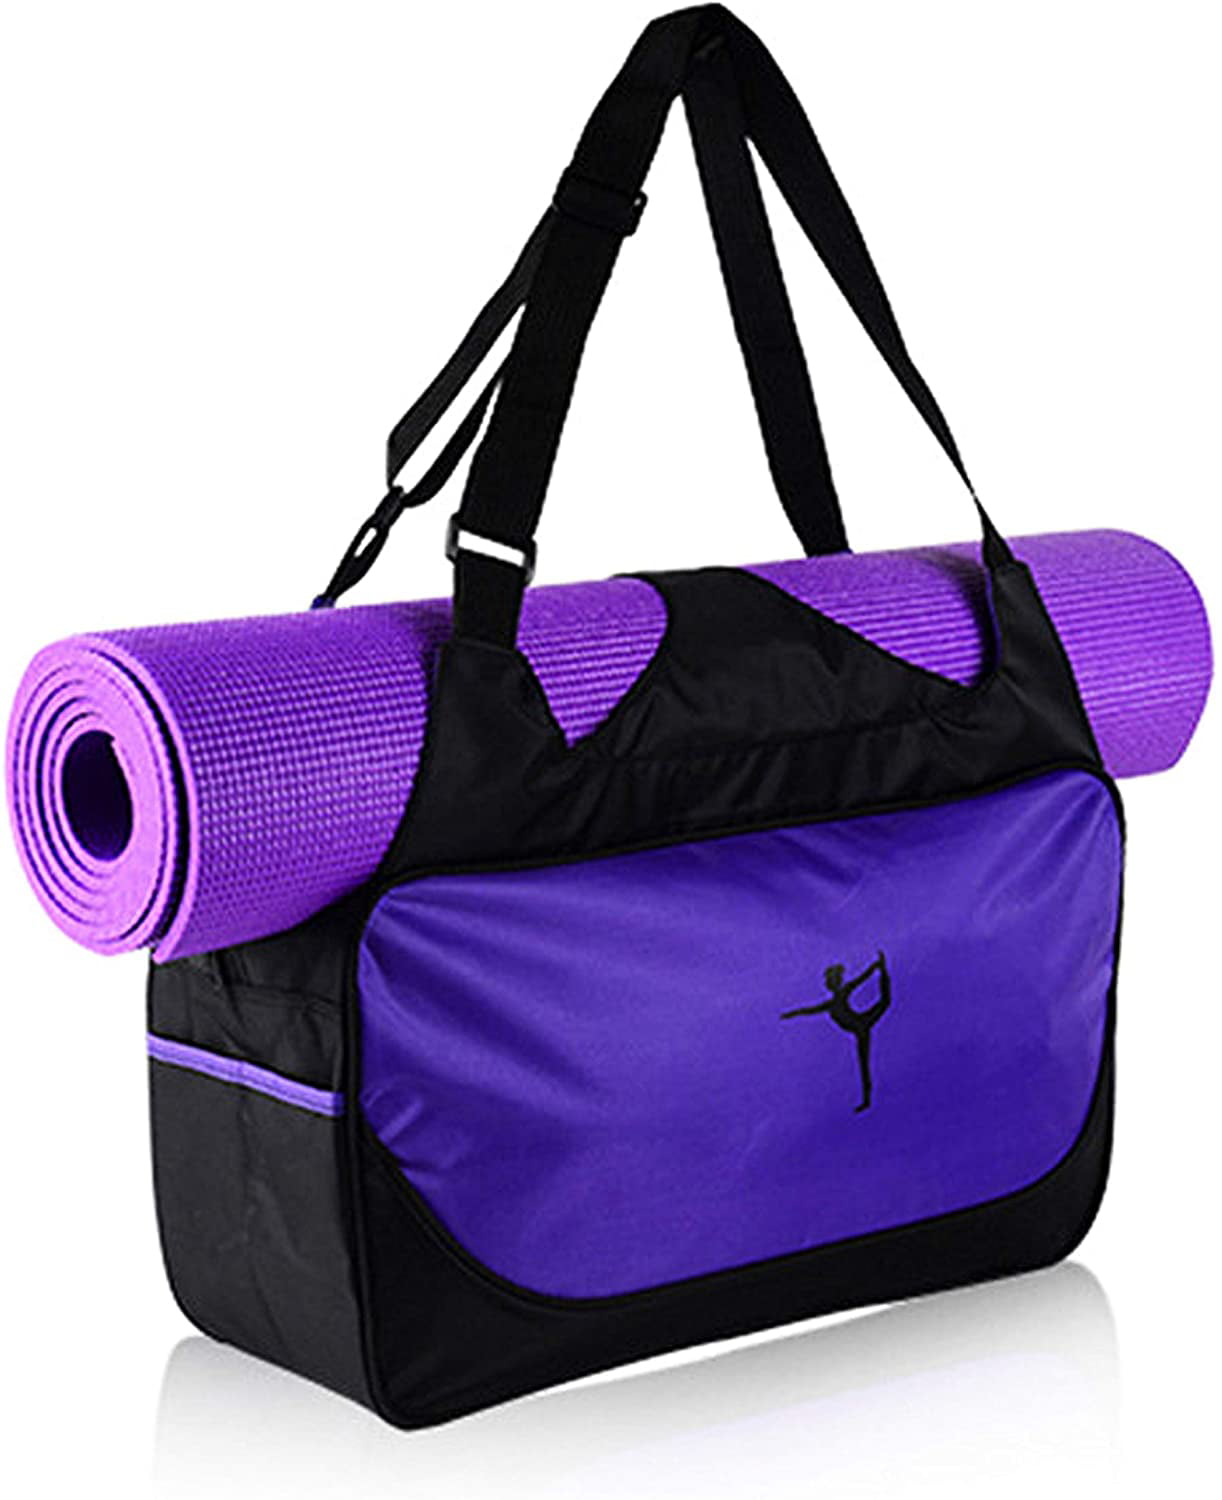 bag for yoga mat